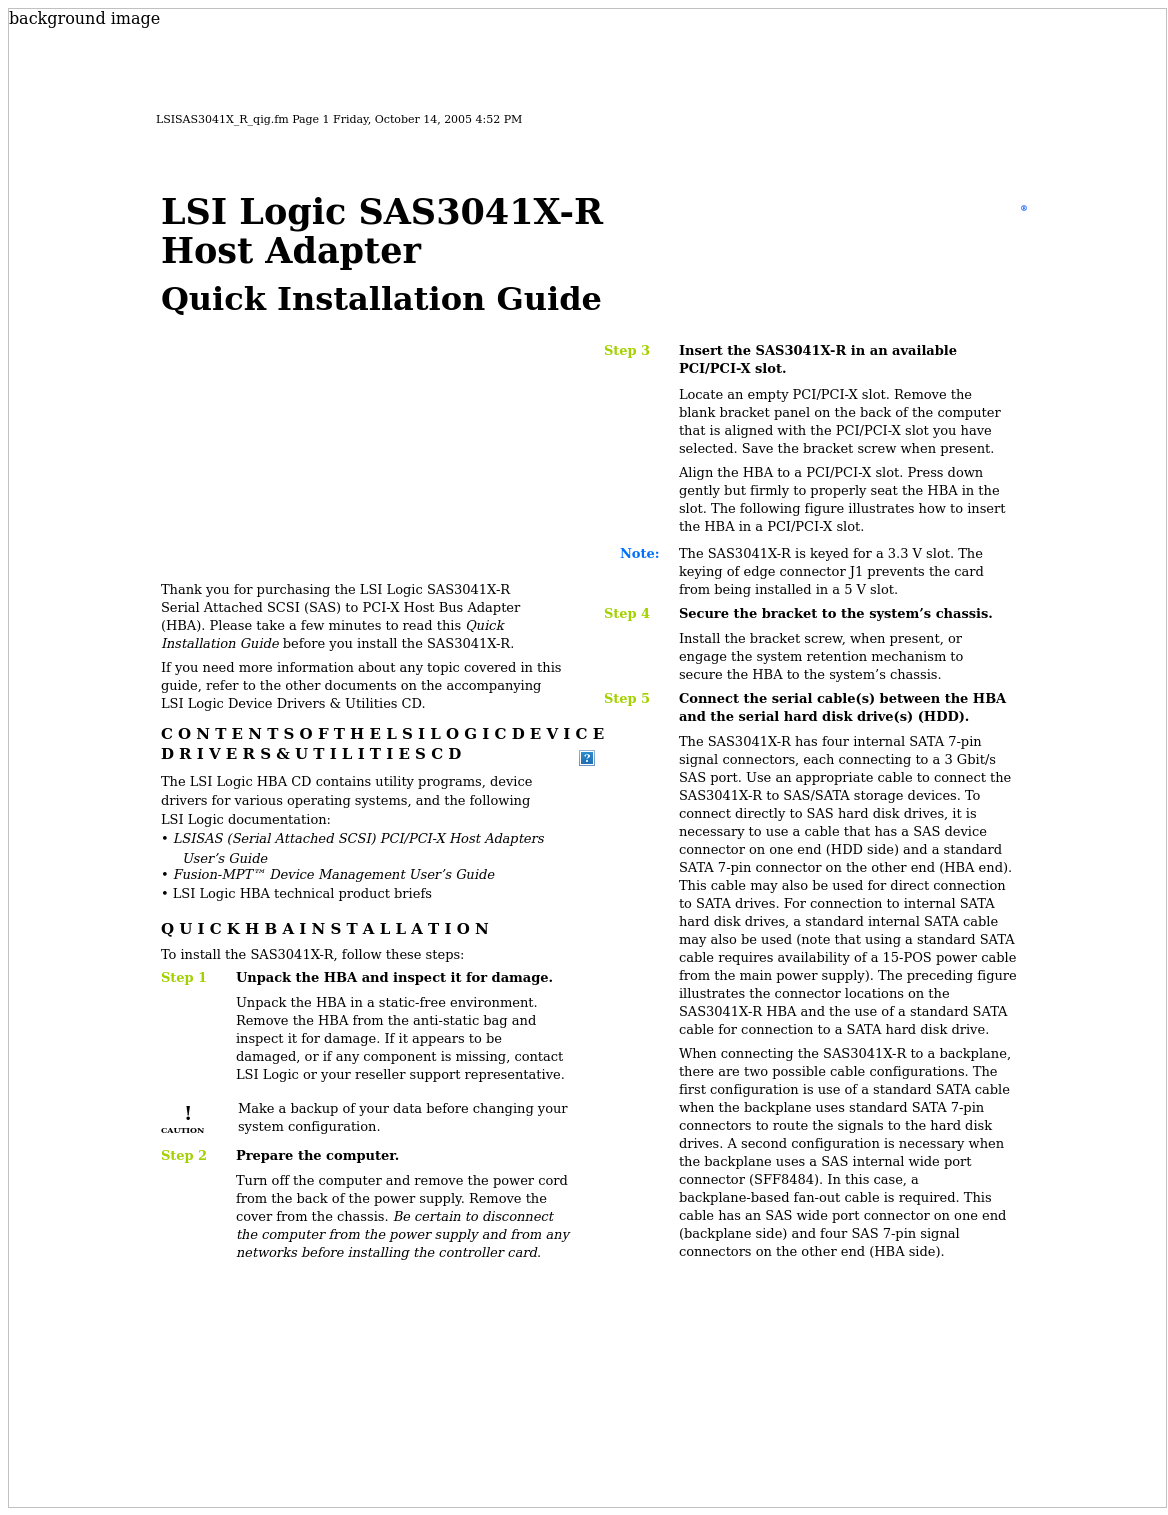 LSI SAS 3041X-R